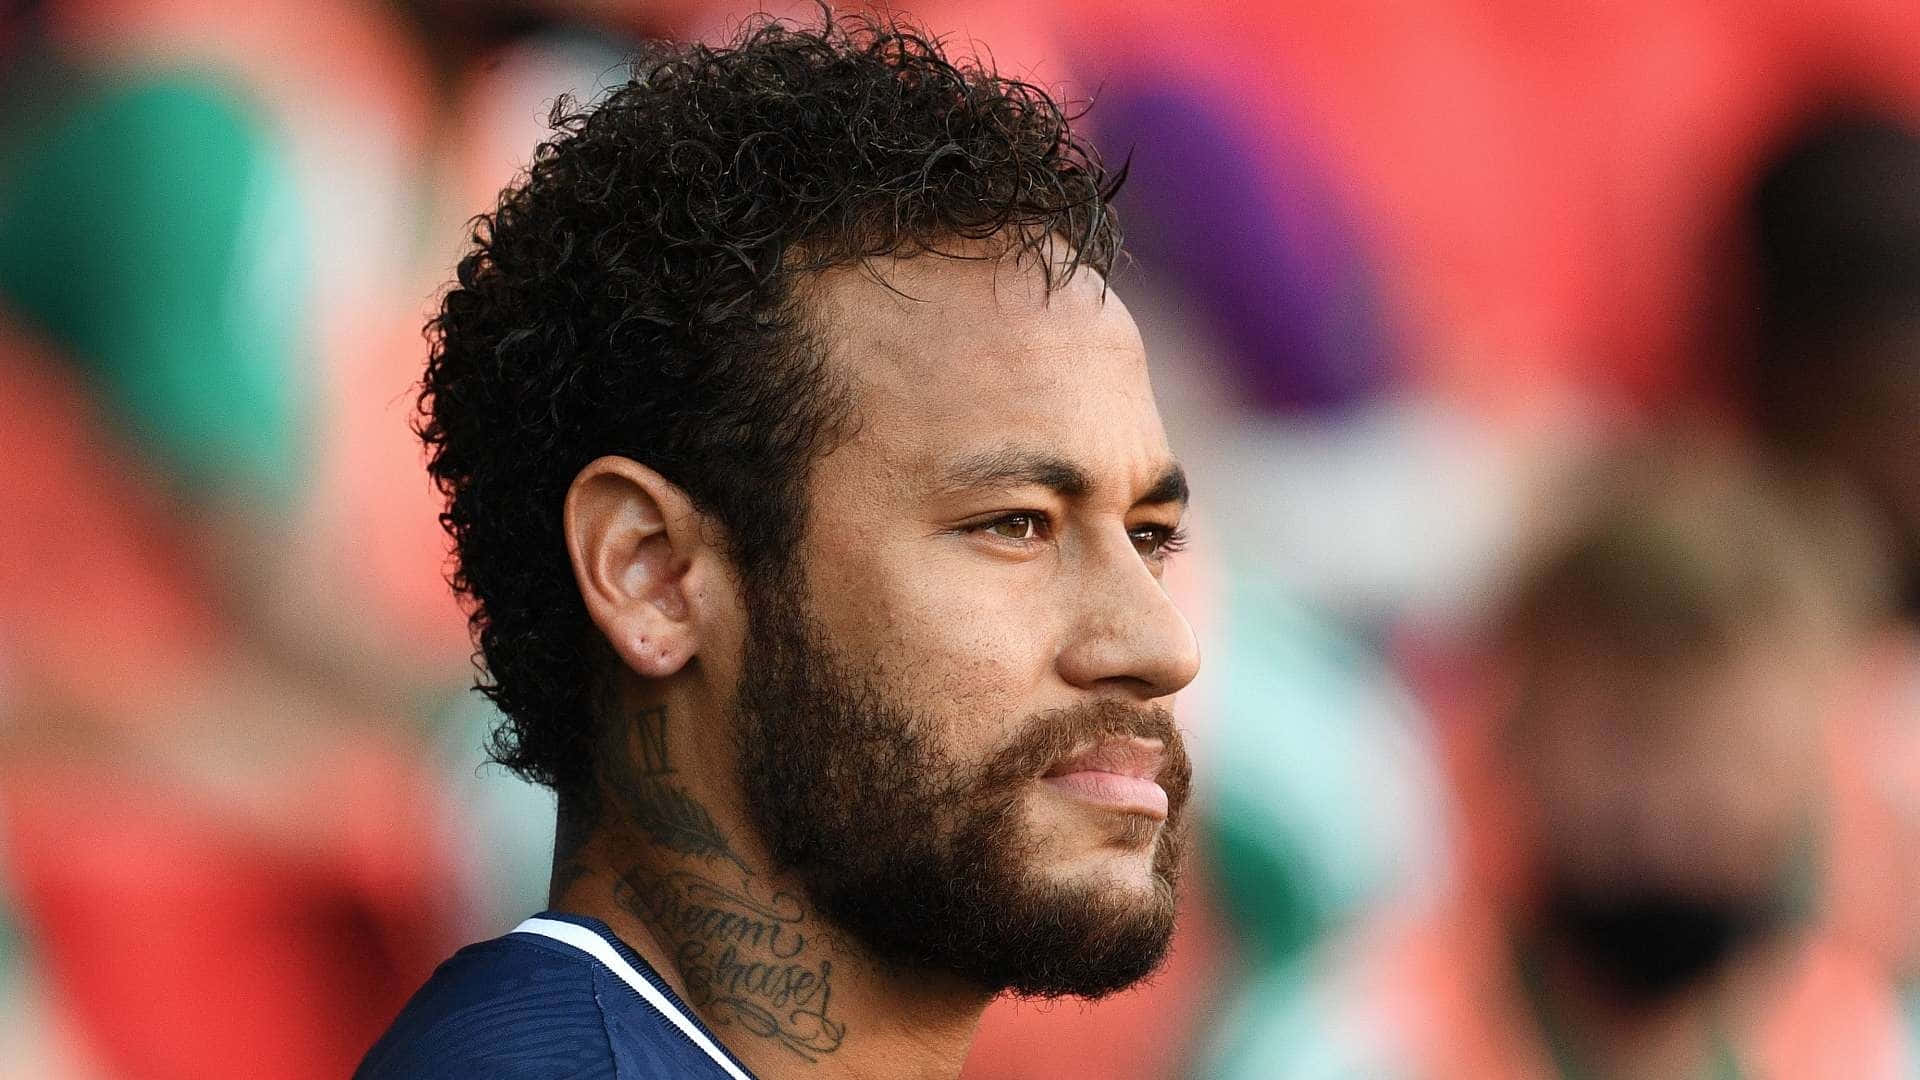 Neymar Profilewith Beard Wallpaper